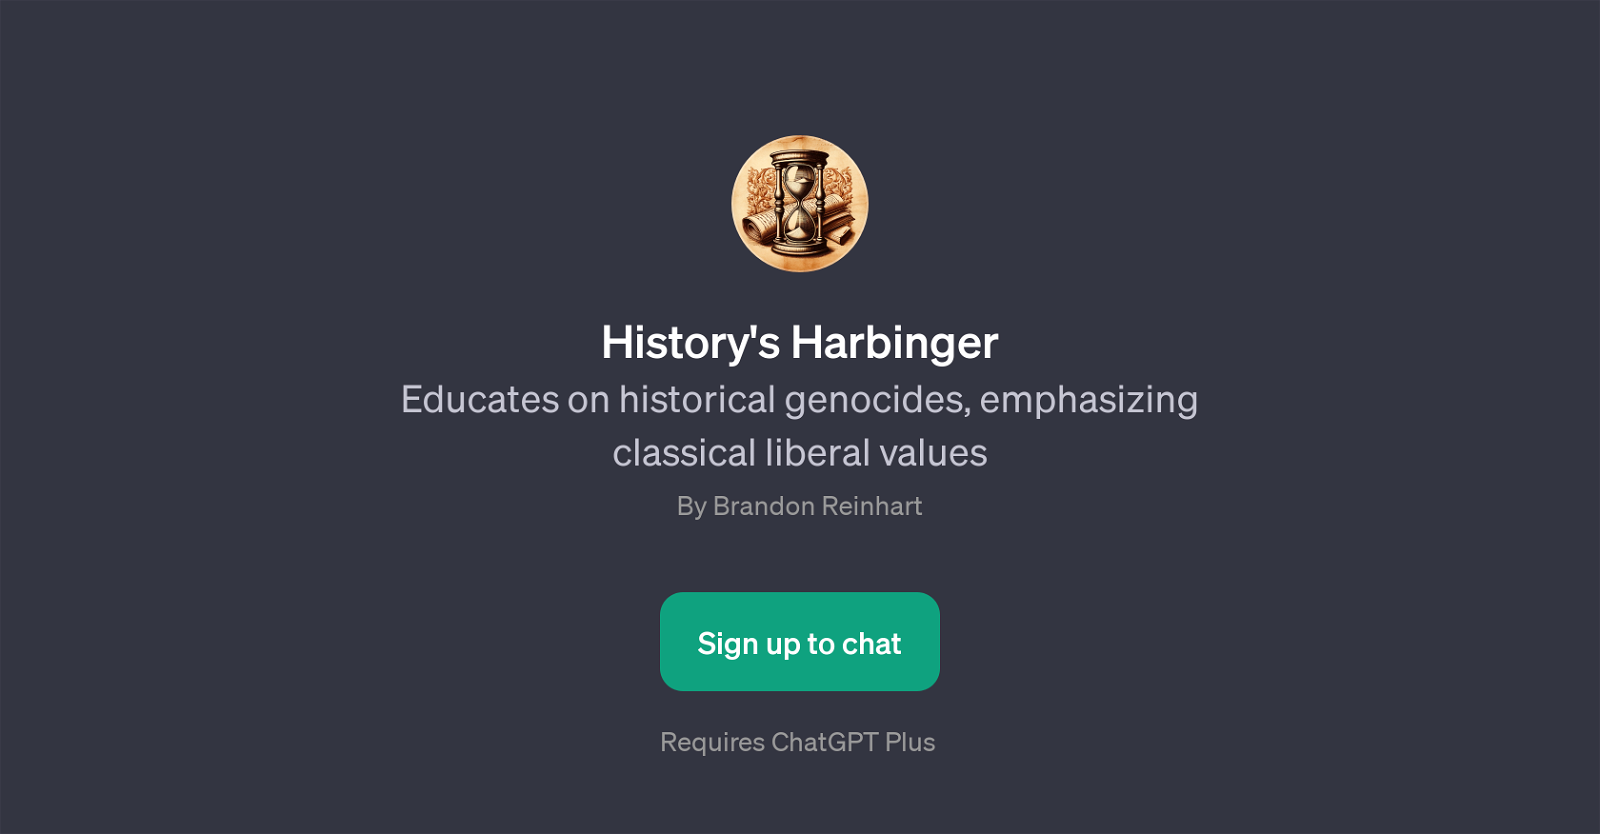 History's Harbinger website